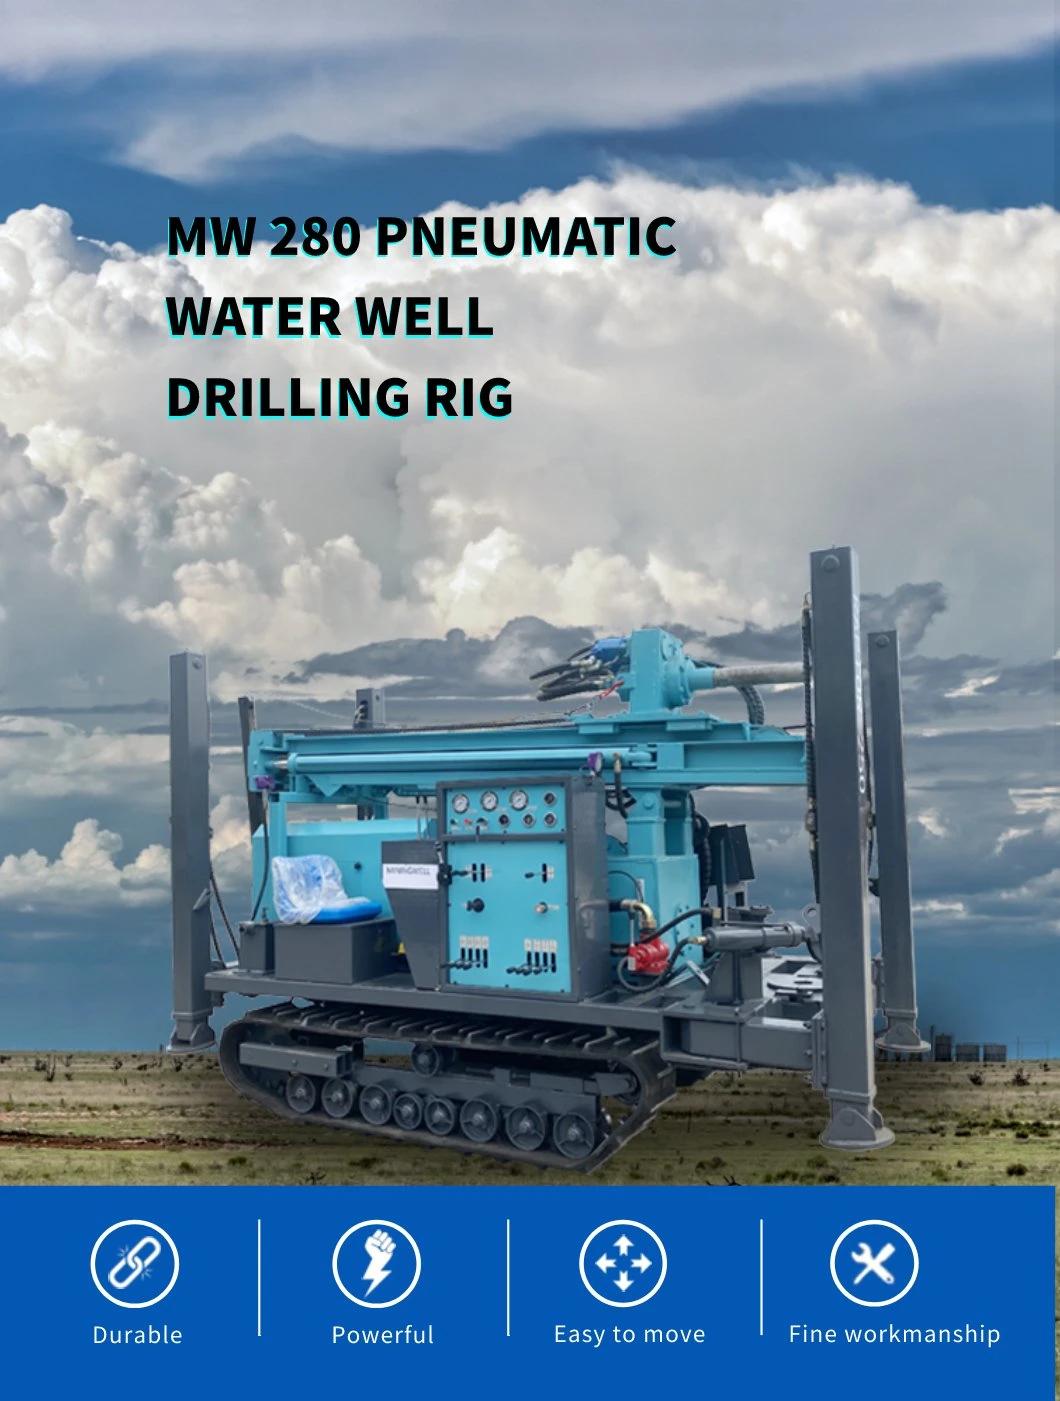 Dminingwell Crawler Hydraulic Drilling Rig Deep Borehole Water Well Driller Water Wells Drilling Rigs MW280